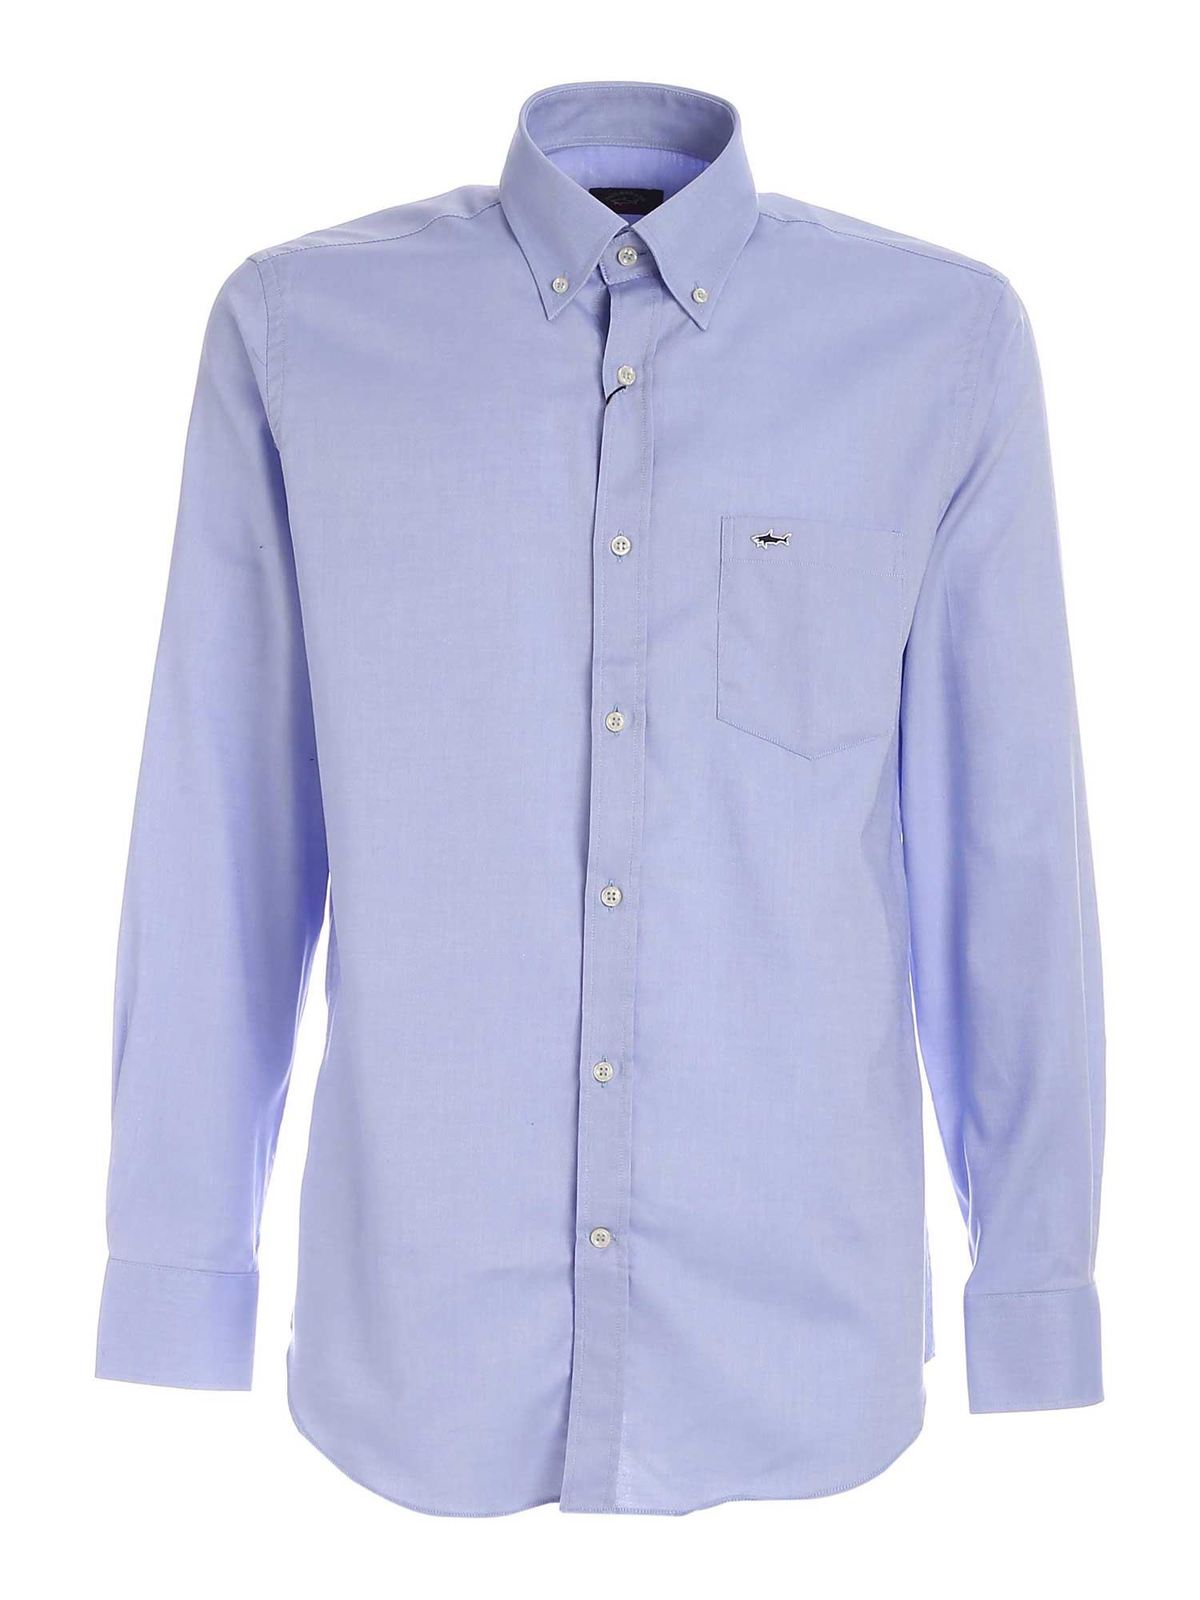 Camisas Paul & - Camisa - Azul Claro - C0P3000014 | THEBS